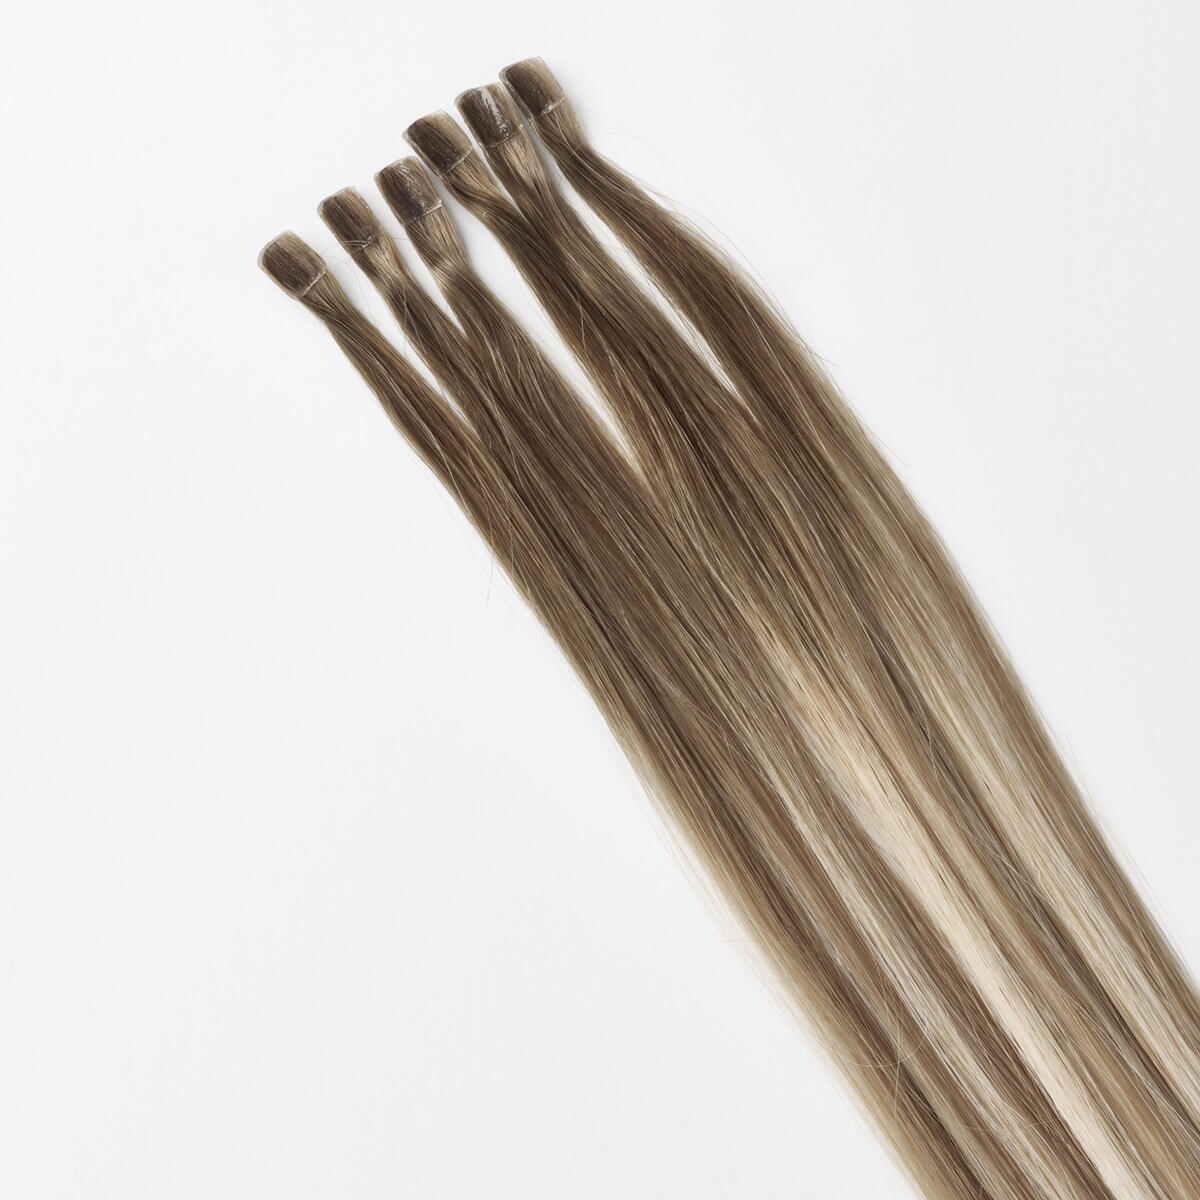 Premium Keratiini Sinettipidennykset - 20 pieces B2.6/10.7 Dark Ashy Blonde Balayage 60 cm